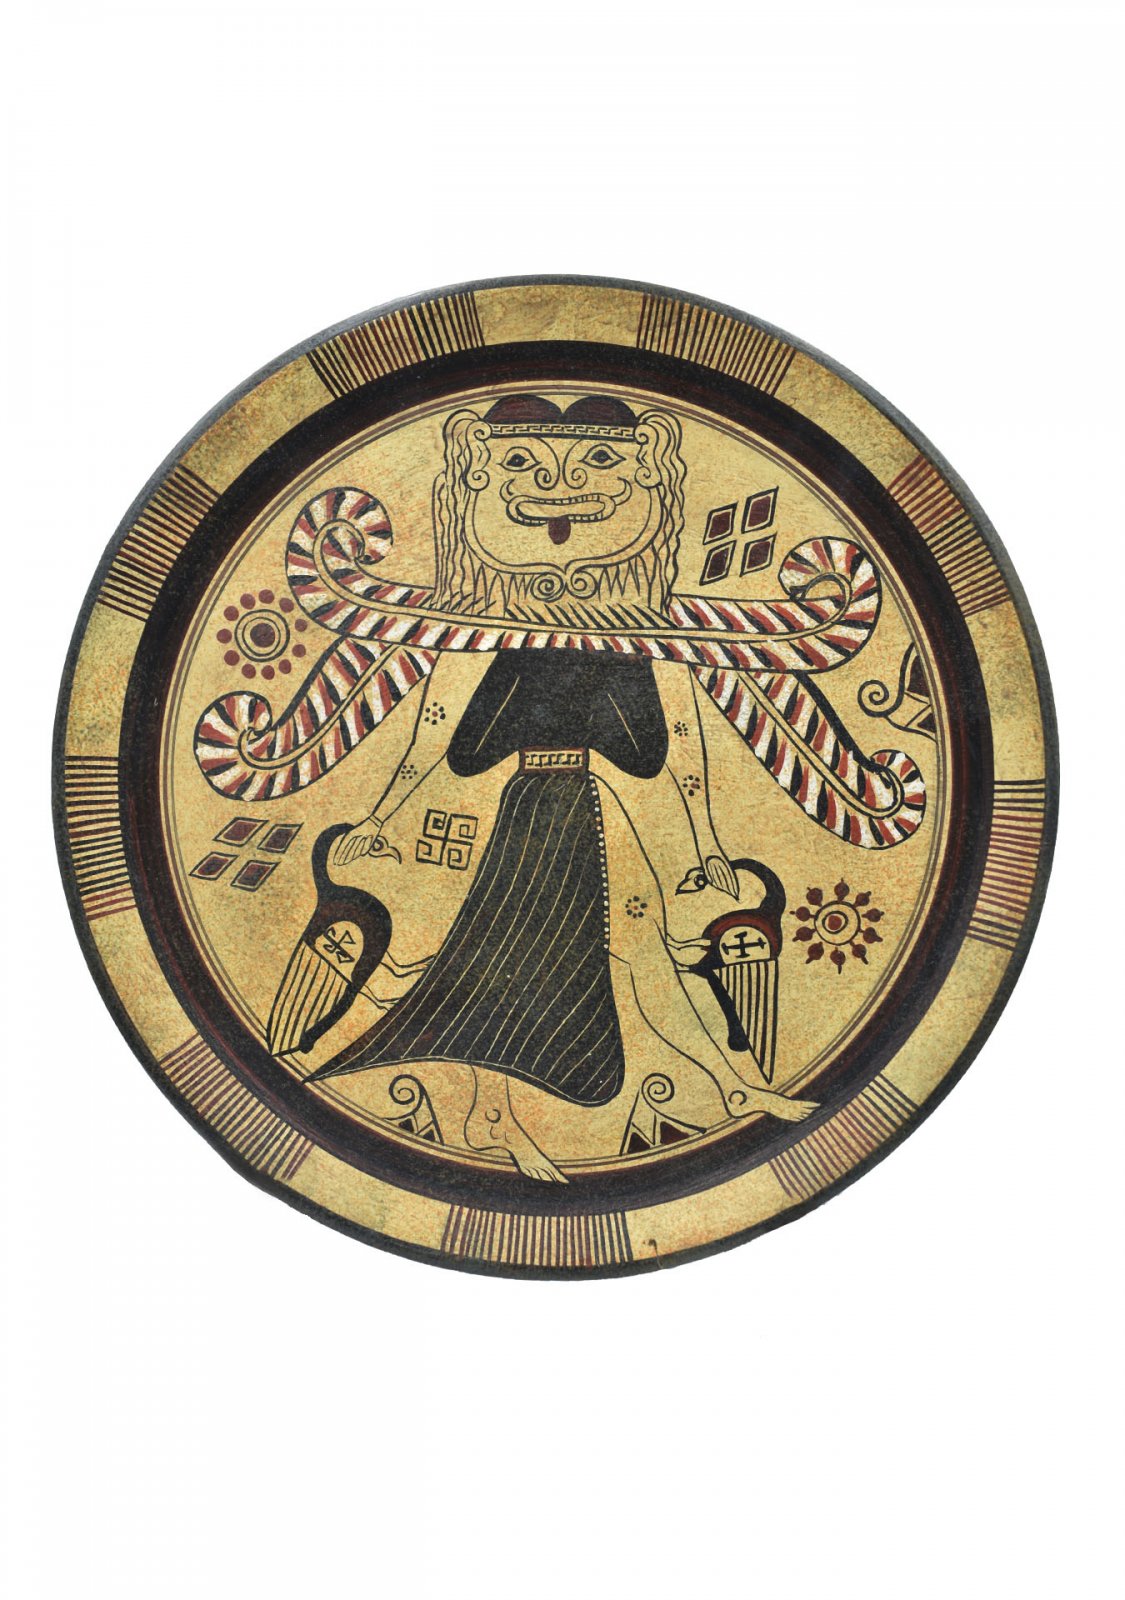 Greek ceramic plate depicting Medusa